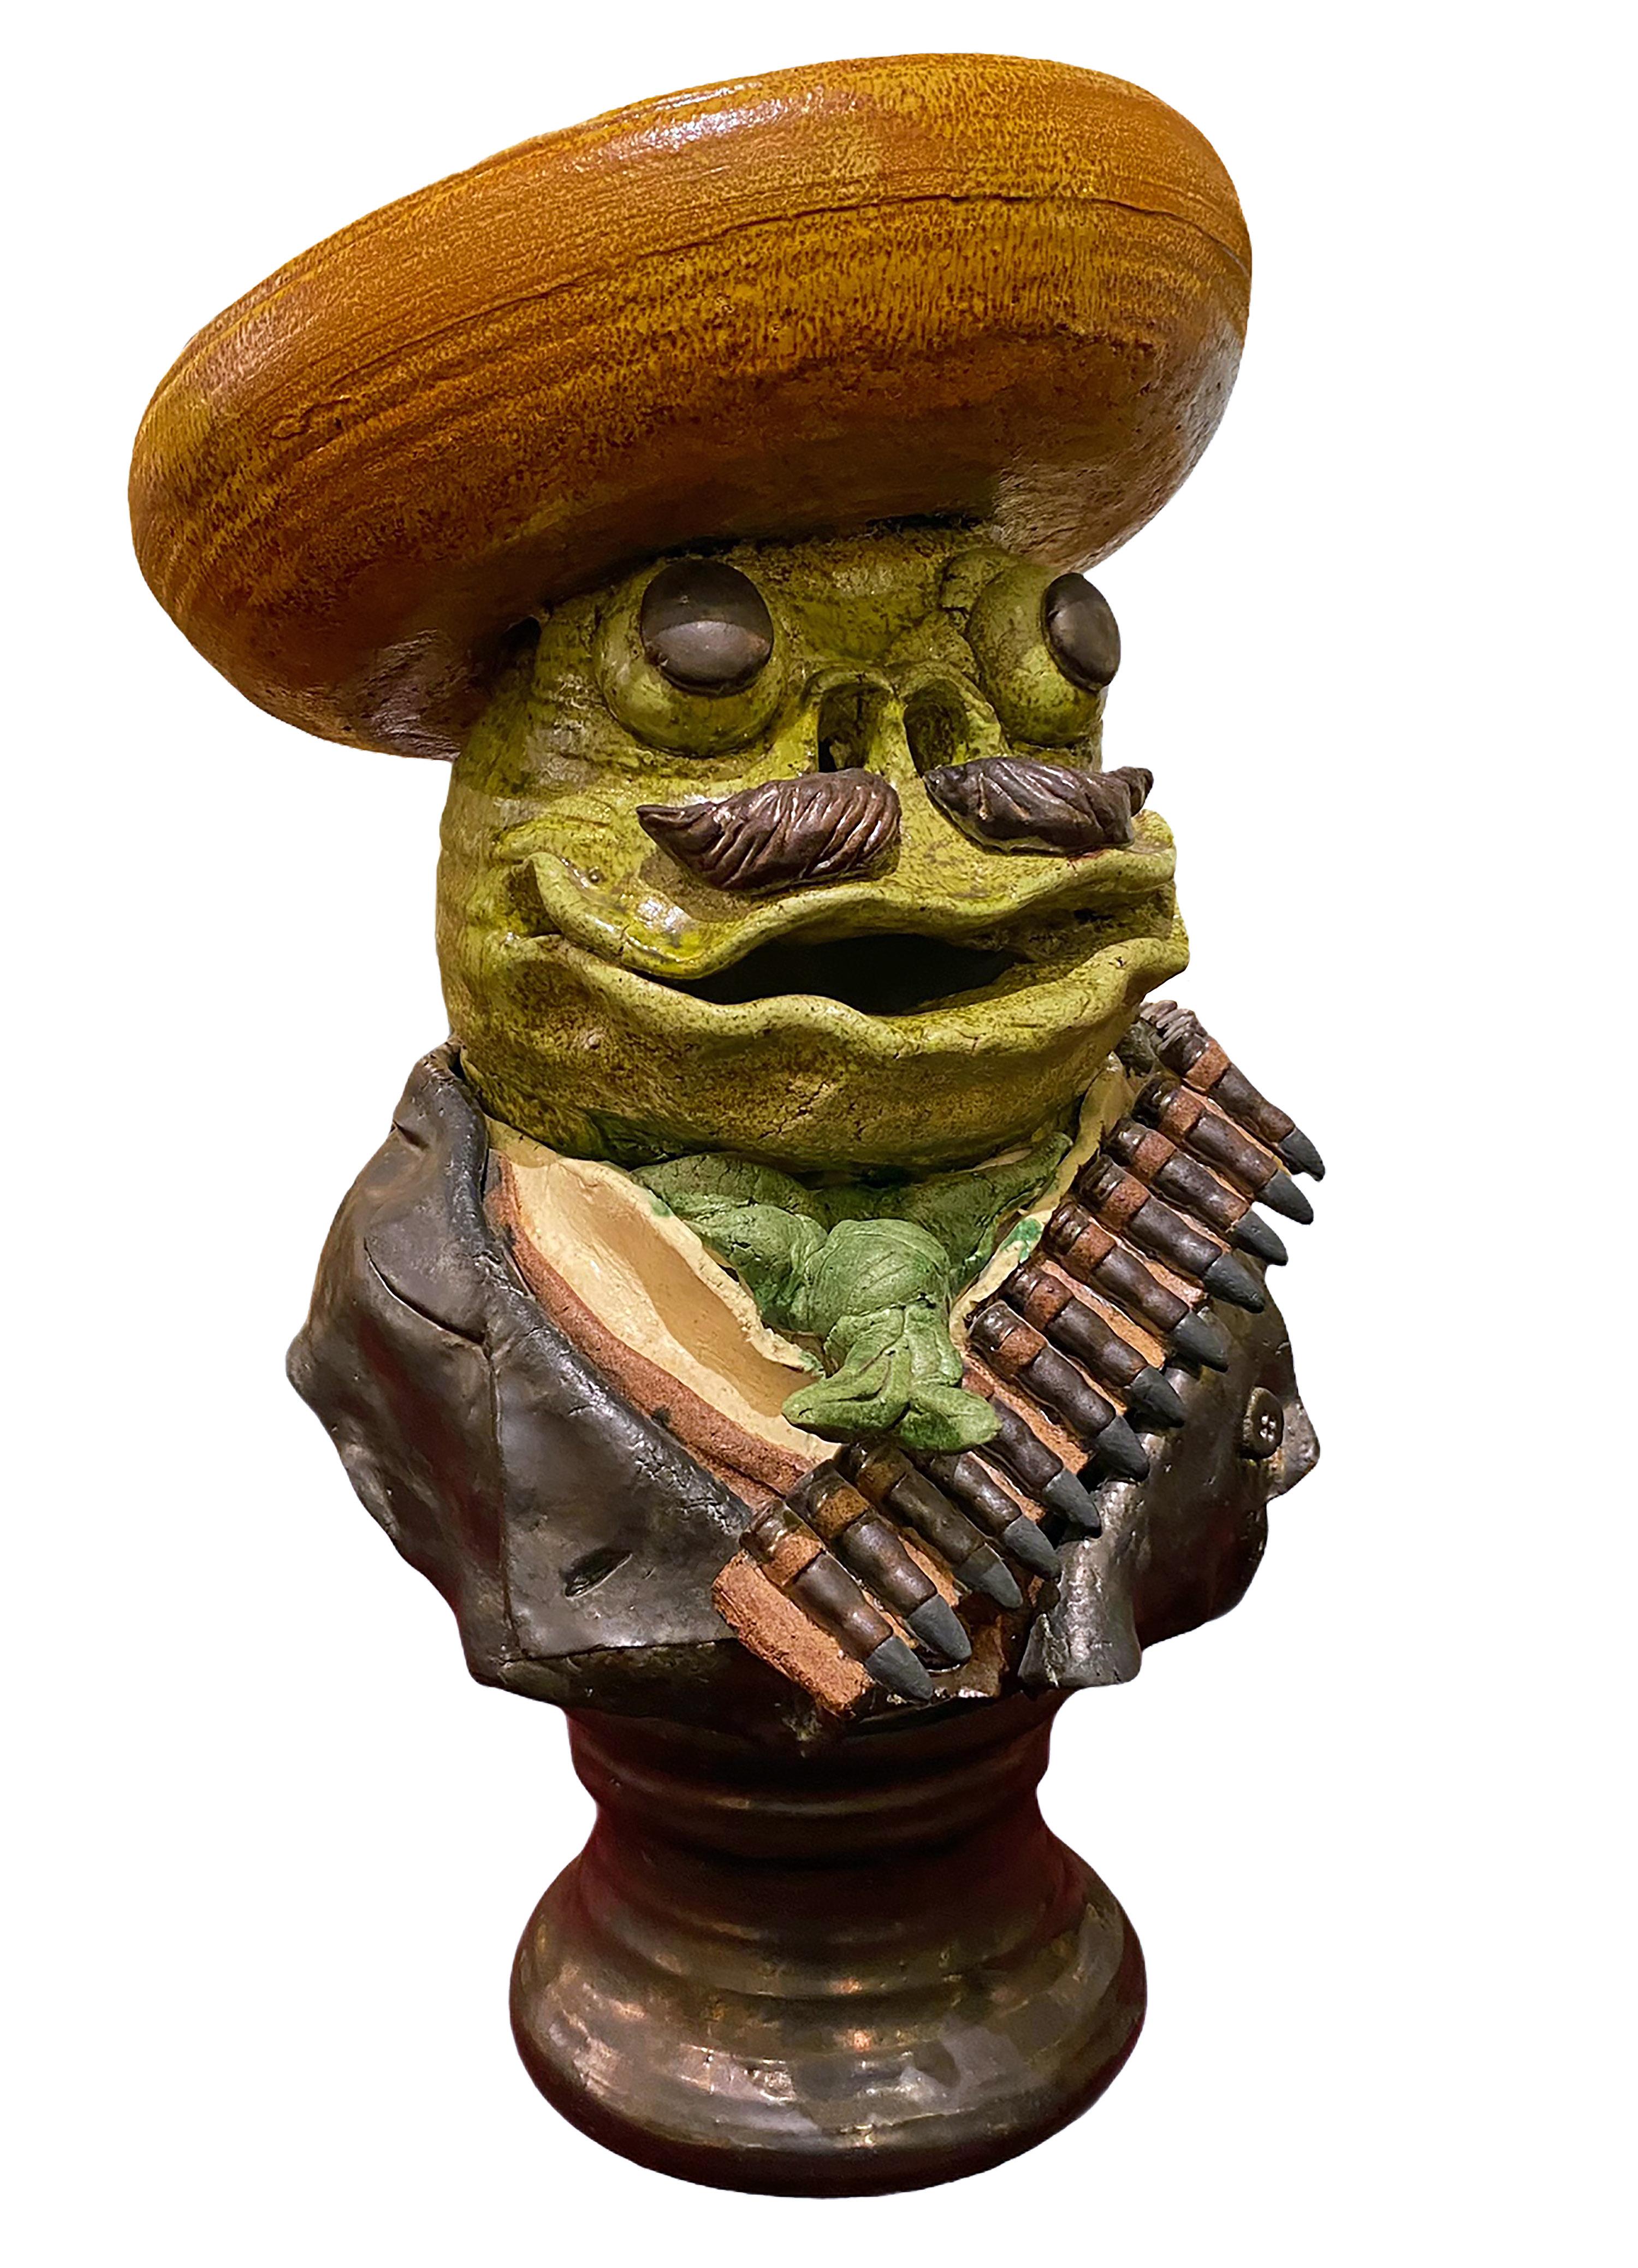 Figurative Sculpture David Gilhooly - Emiliano Zapata / Grenouille révolutionnaire